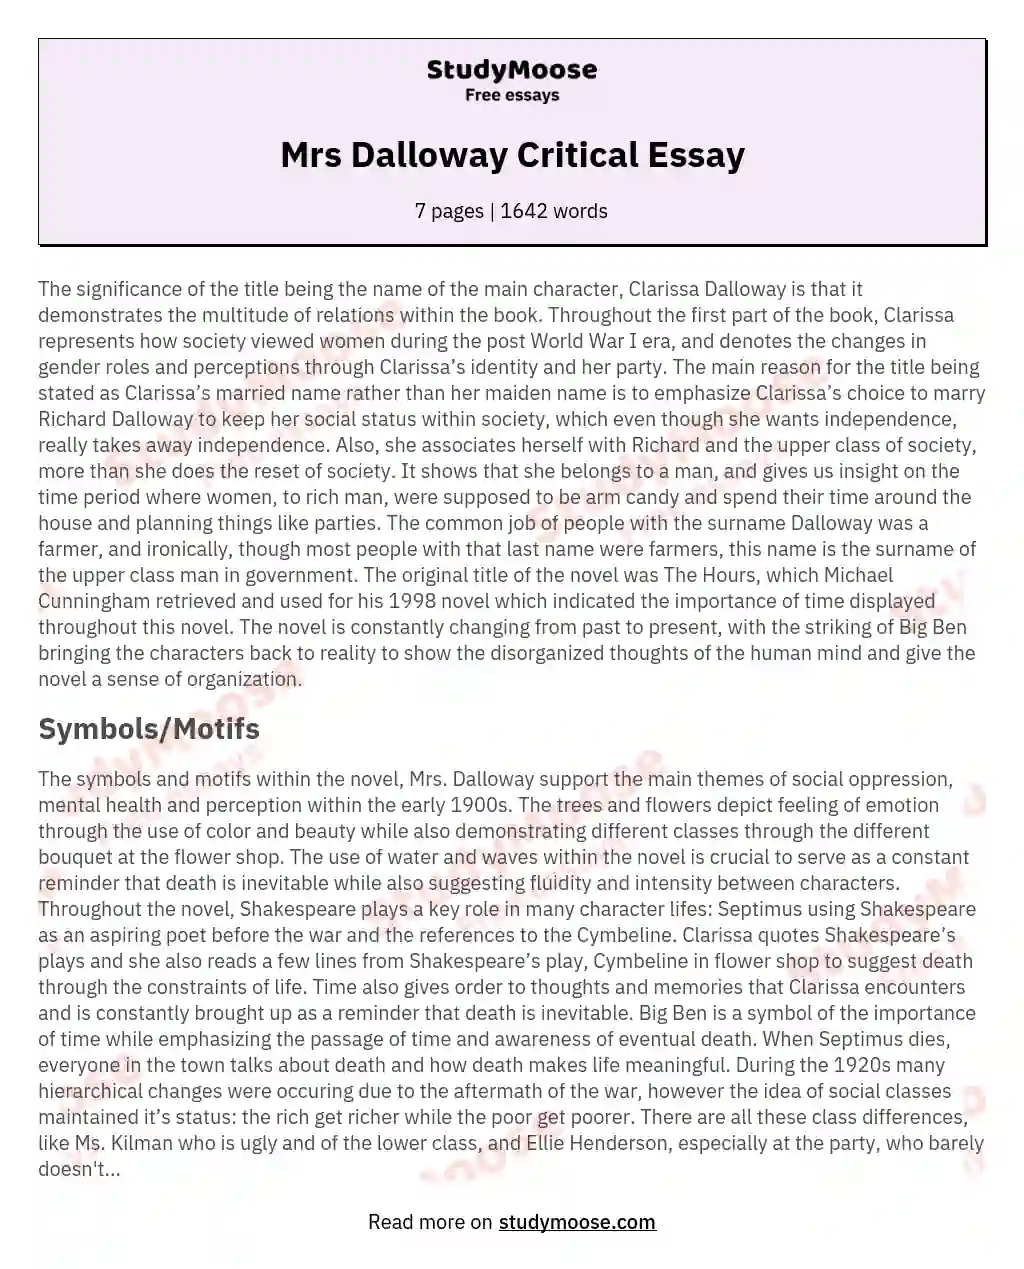 Mrs Dalloway Critical Essay essay